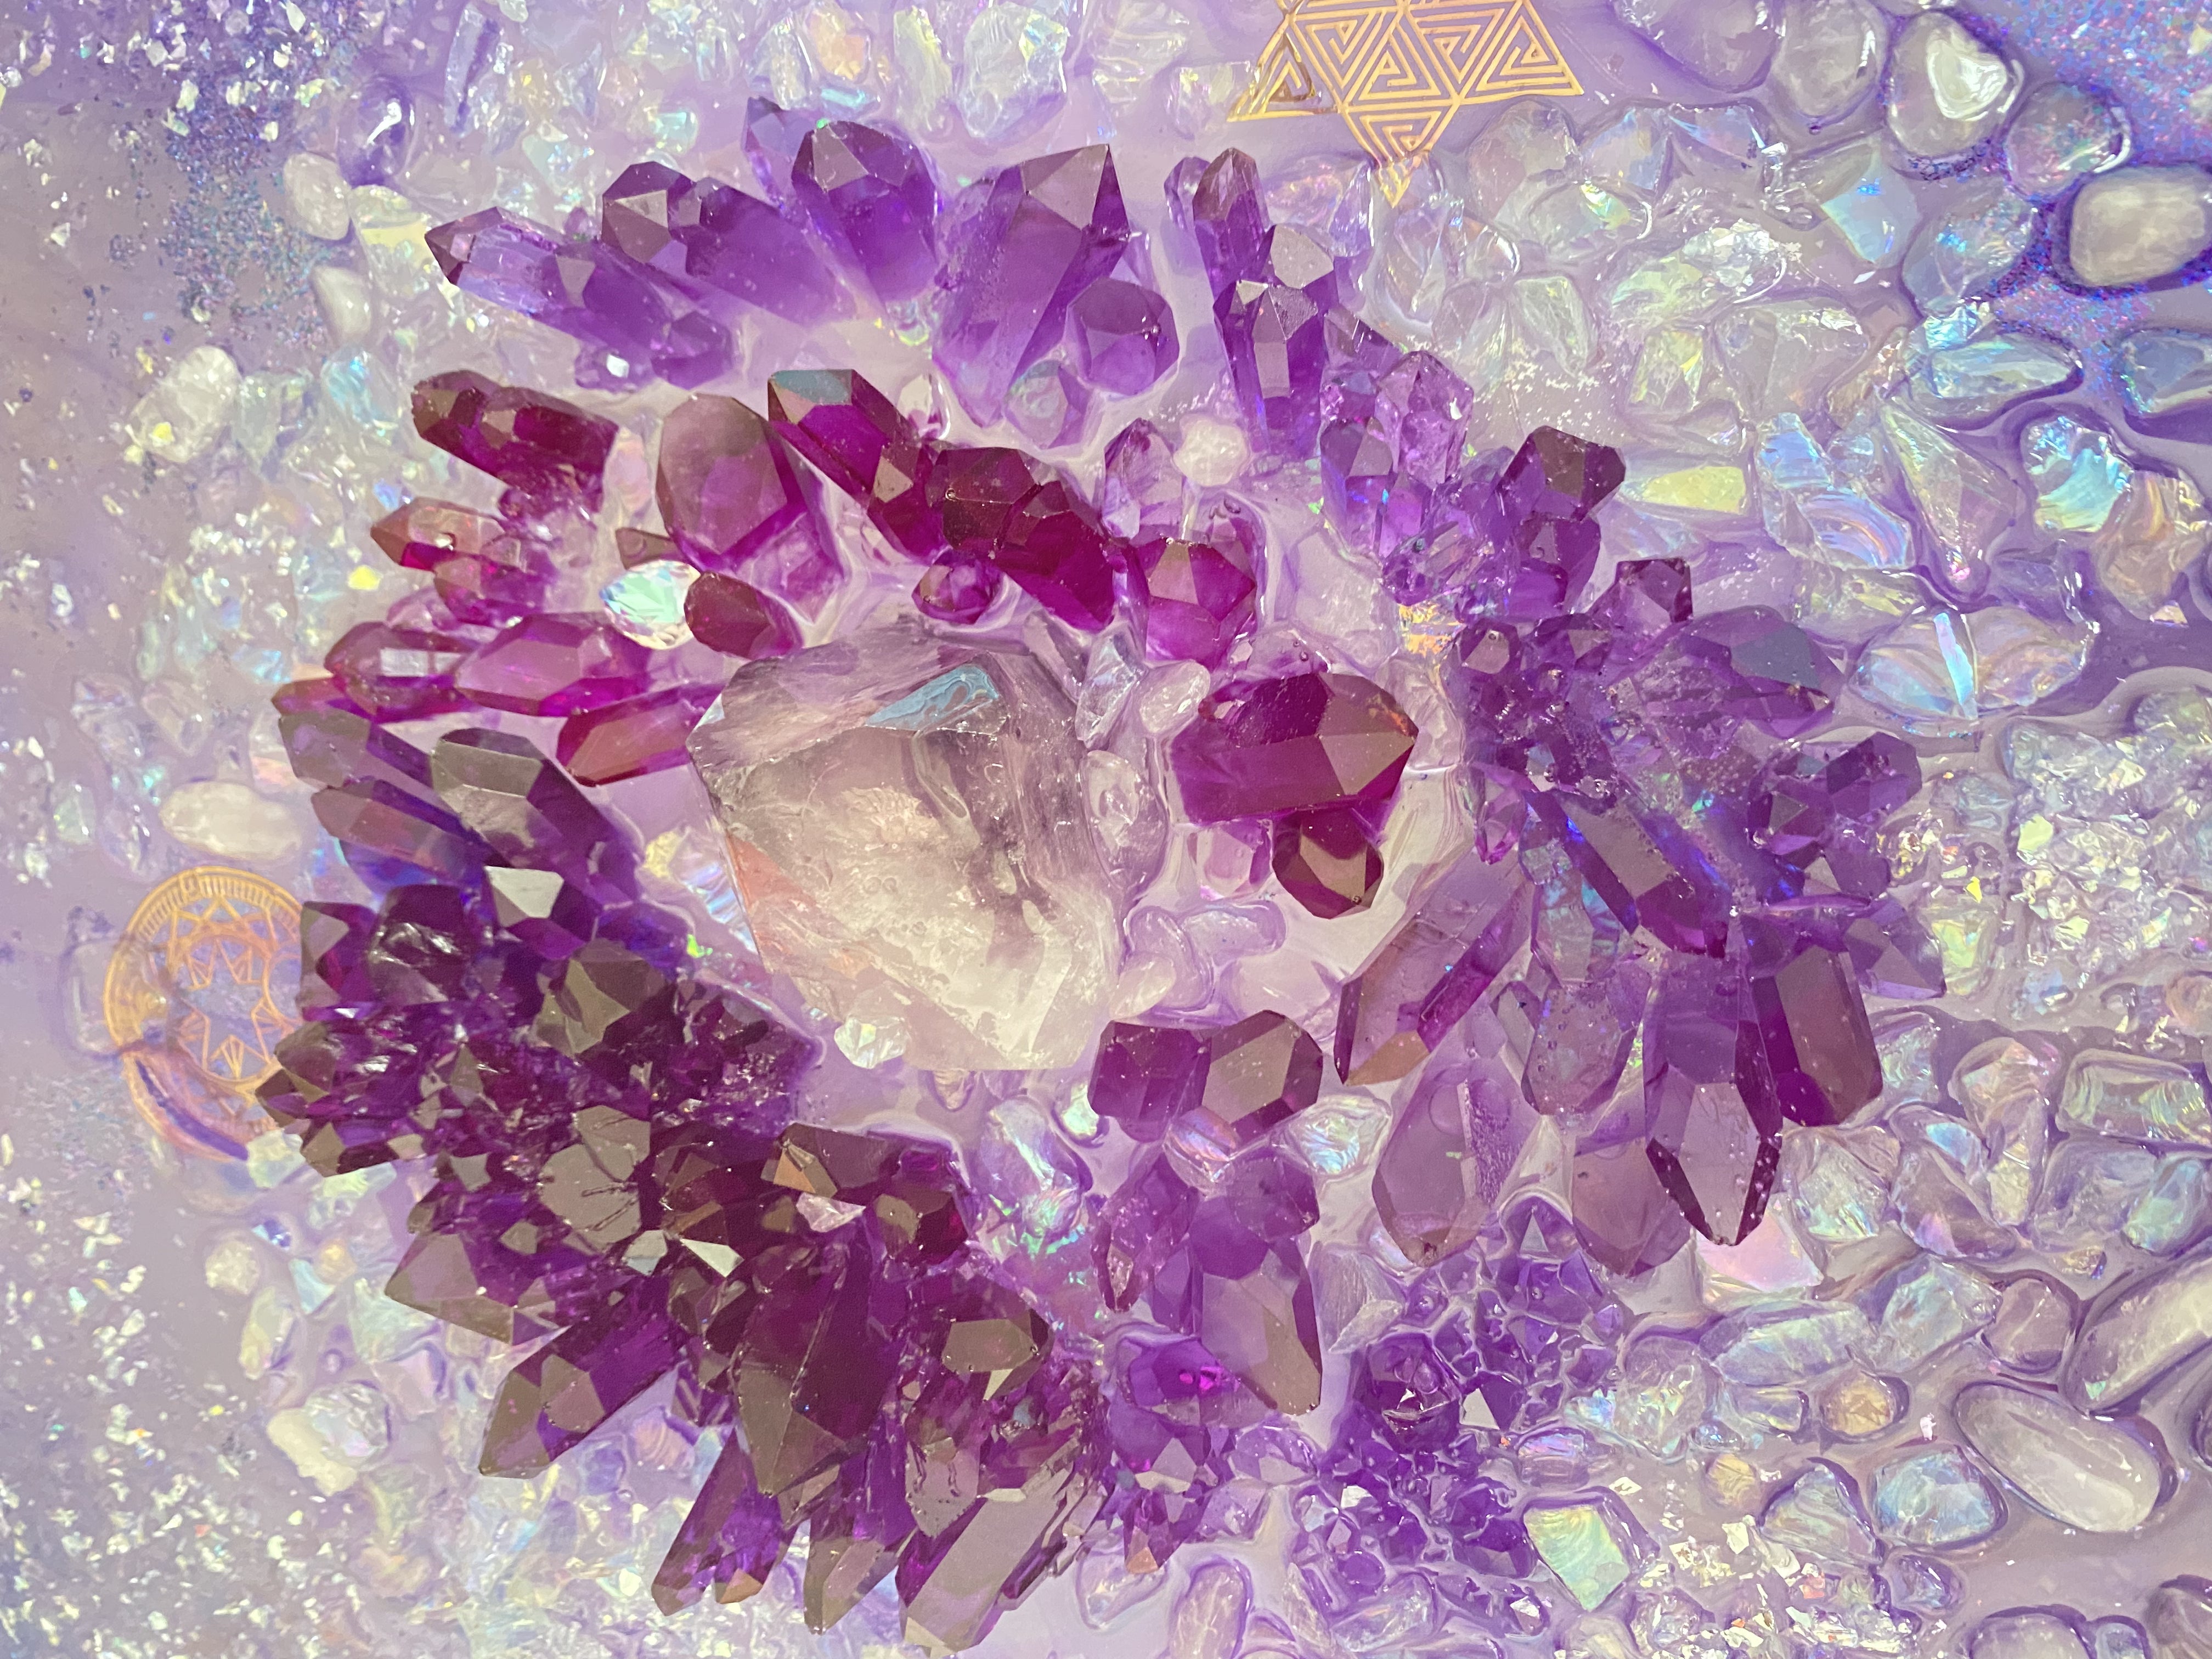 Purple amethyst free shape artwork with rose quartz and amethysts crystals.